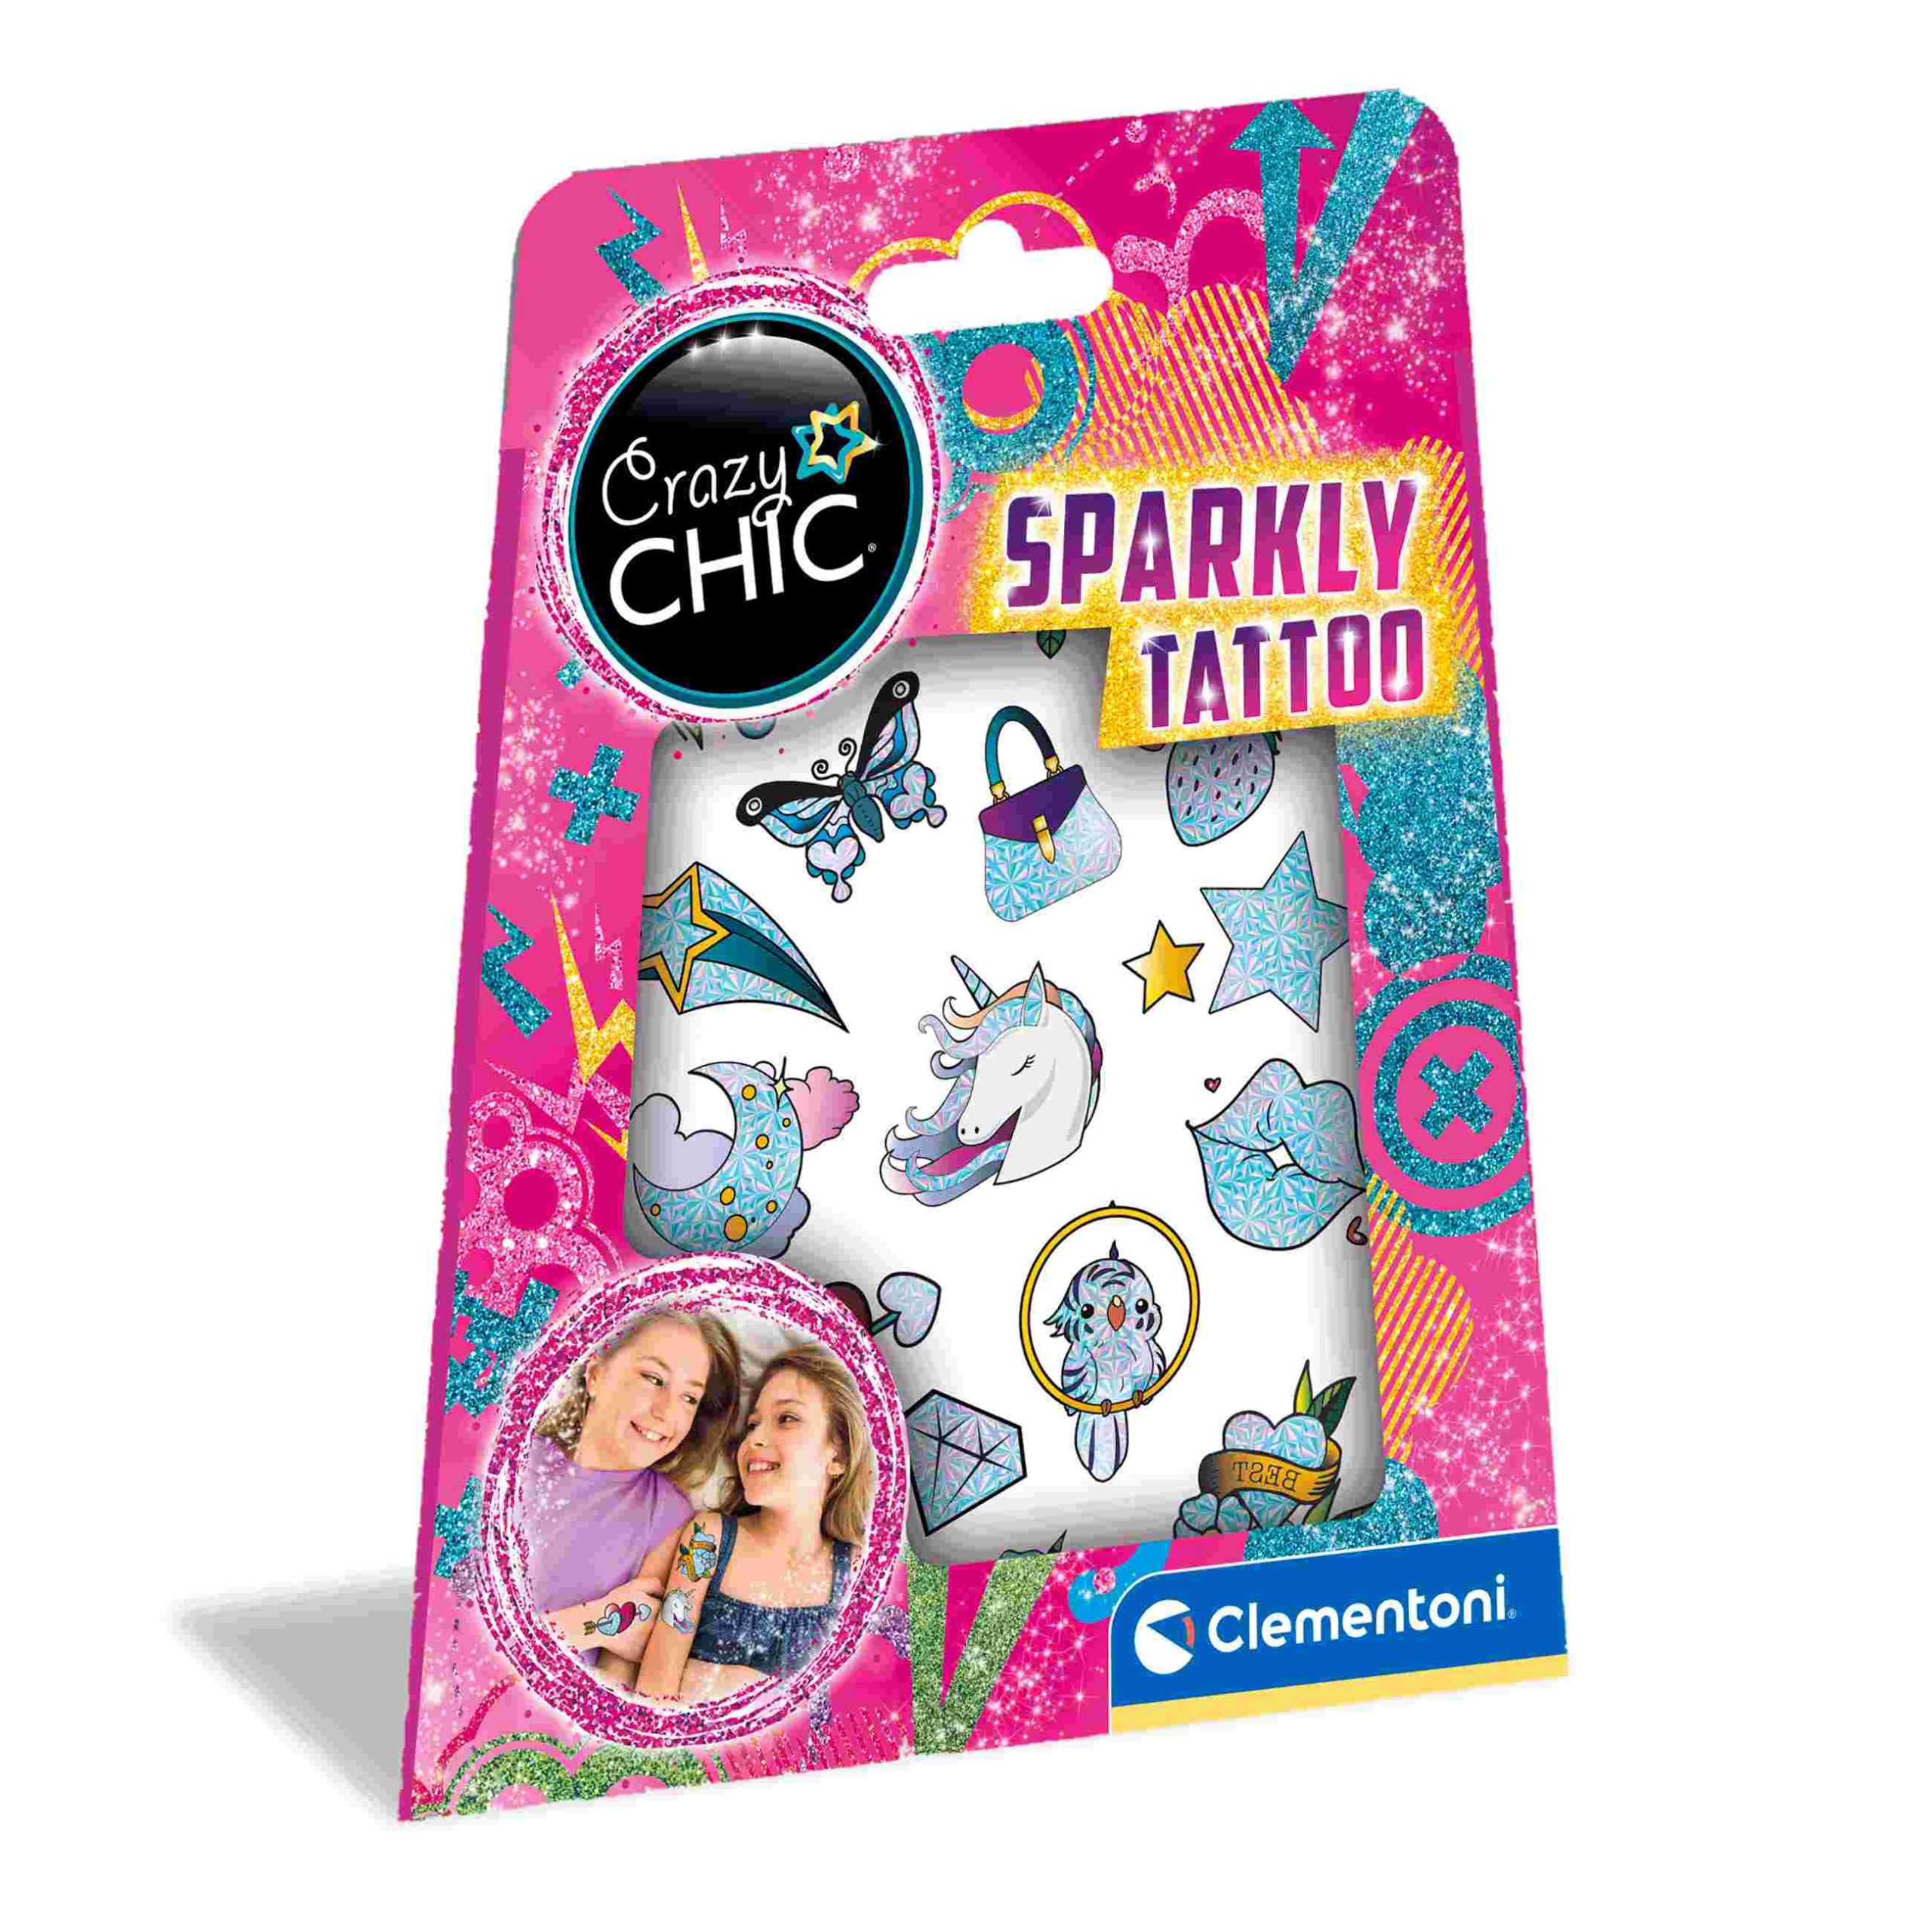 Sparkly tattoo - CRAZY CHIC